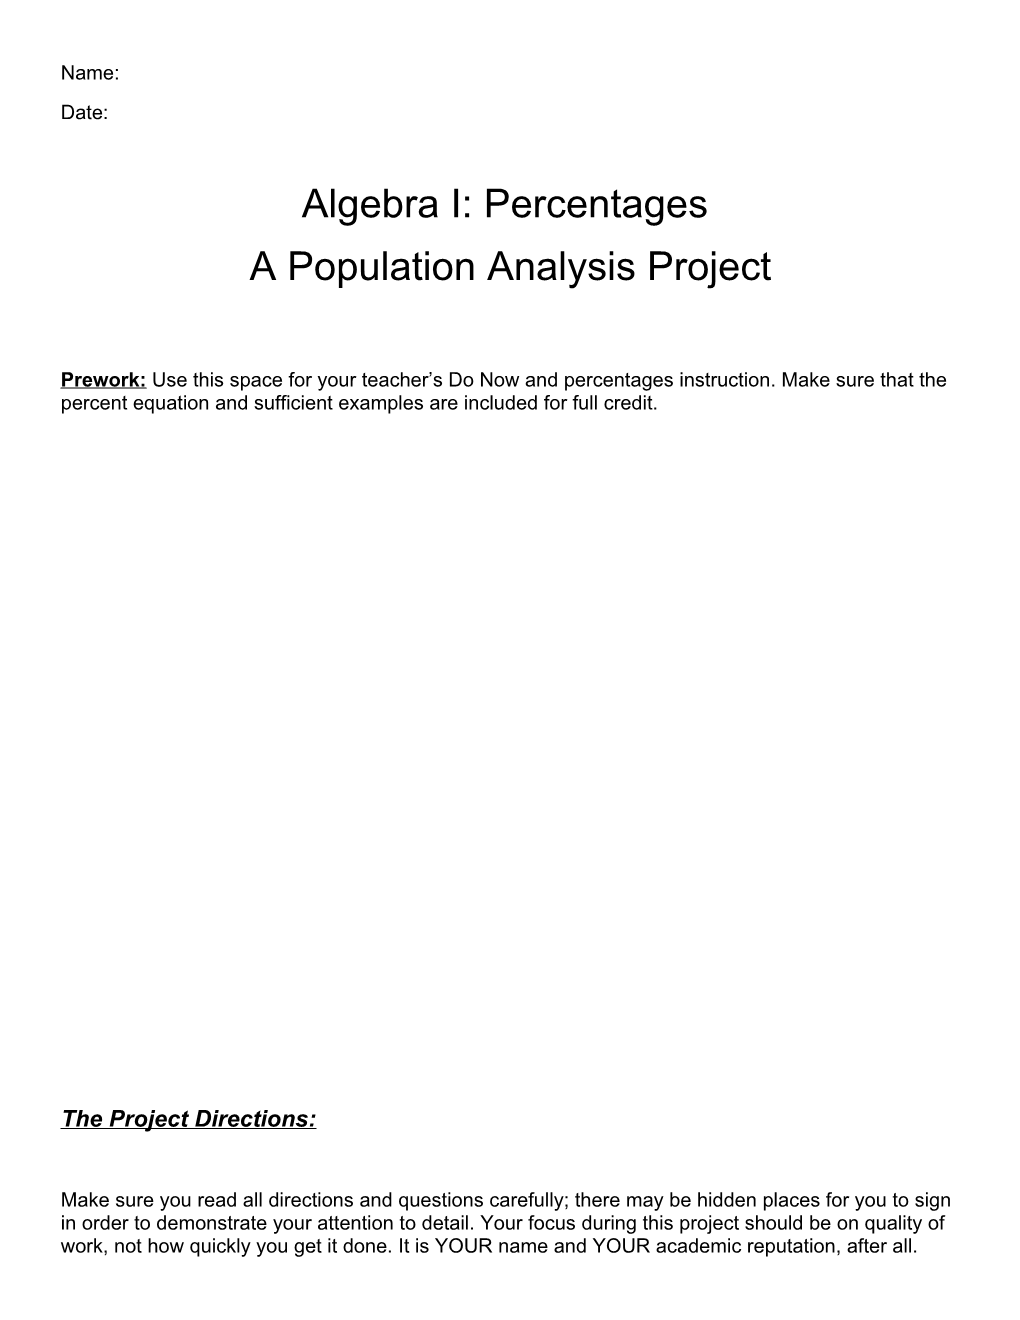 Algebra I: Percentages